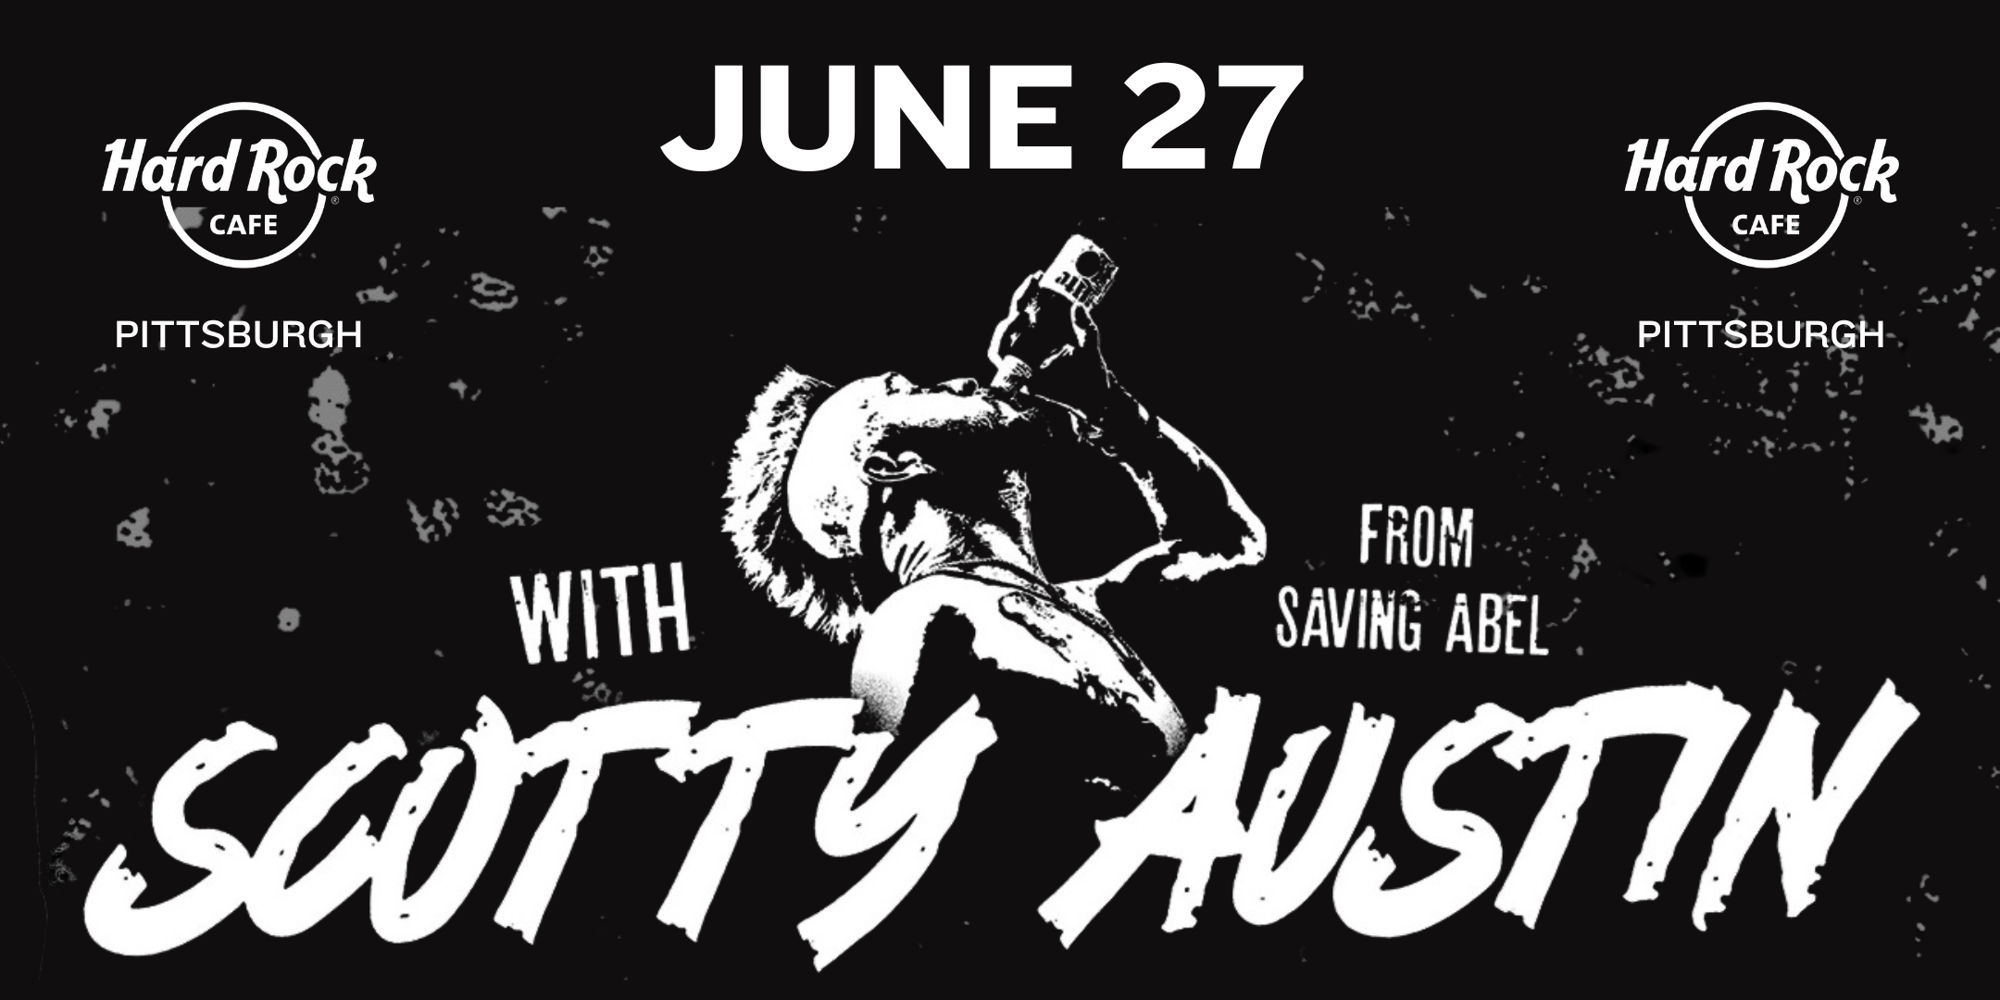 Scotty Austin (of Saving Abel) promotional image